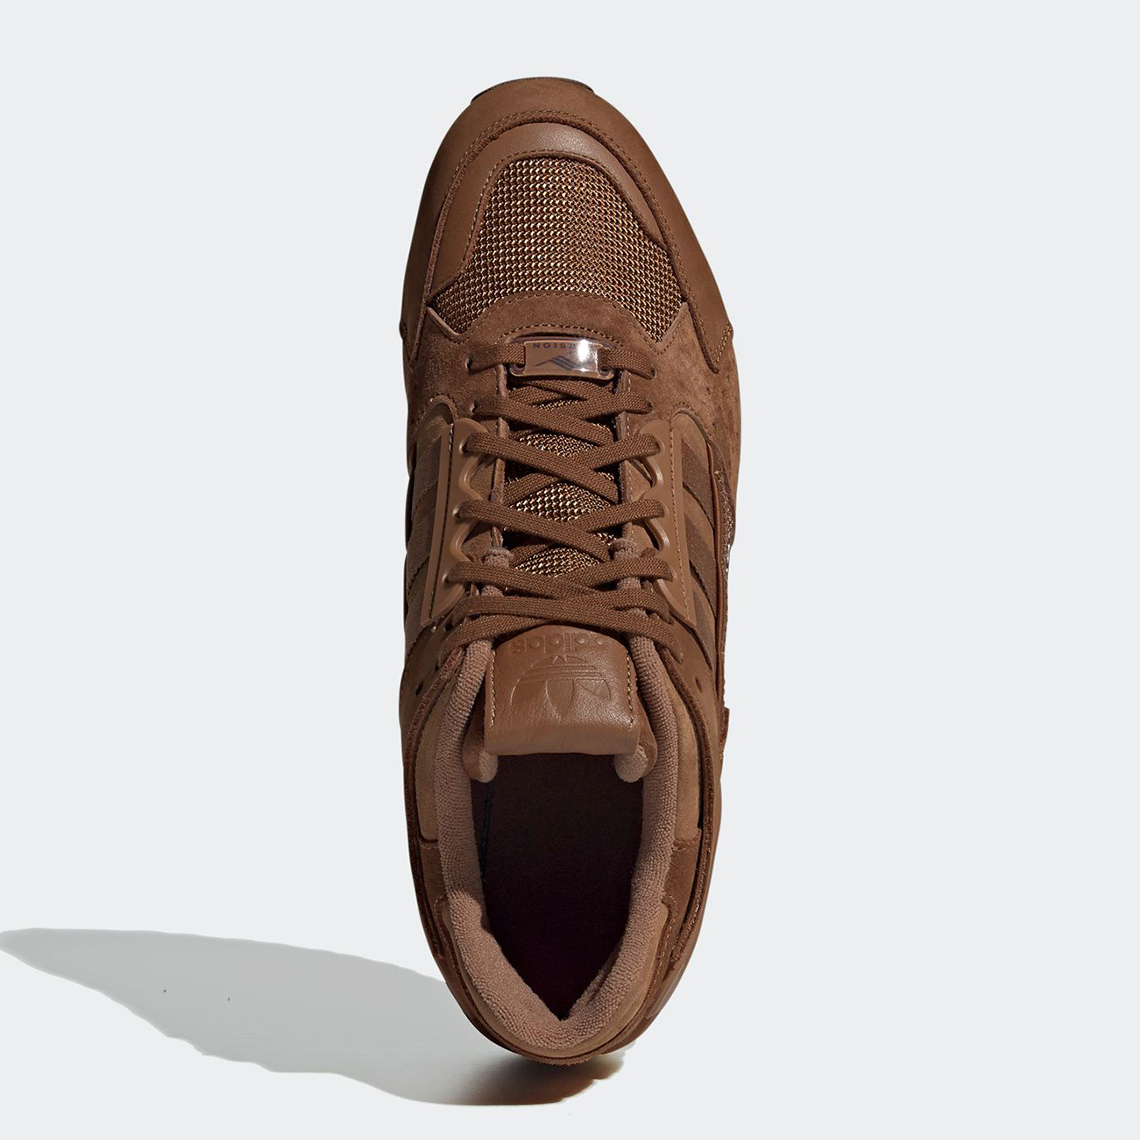 adidas ZX 10.000C Schokohase GX7576 Release Info | SneakerNews.com